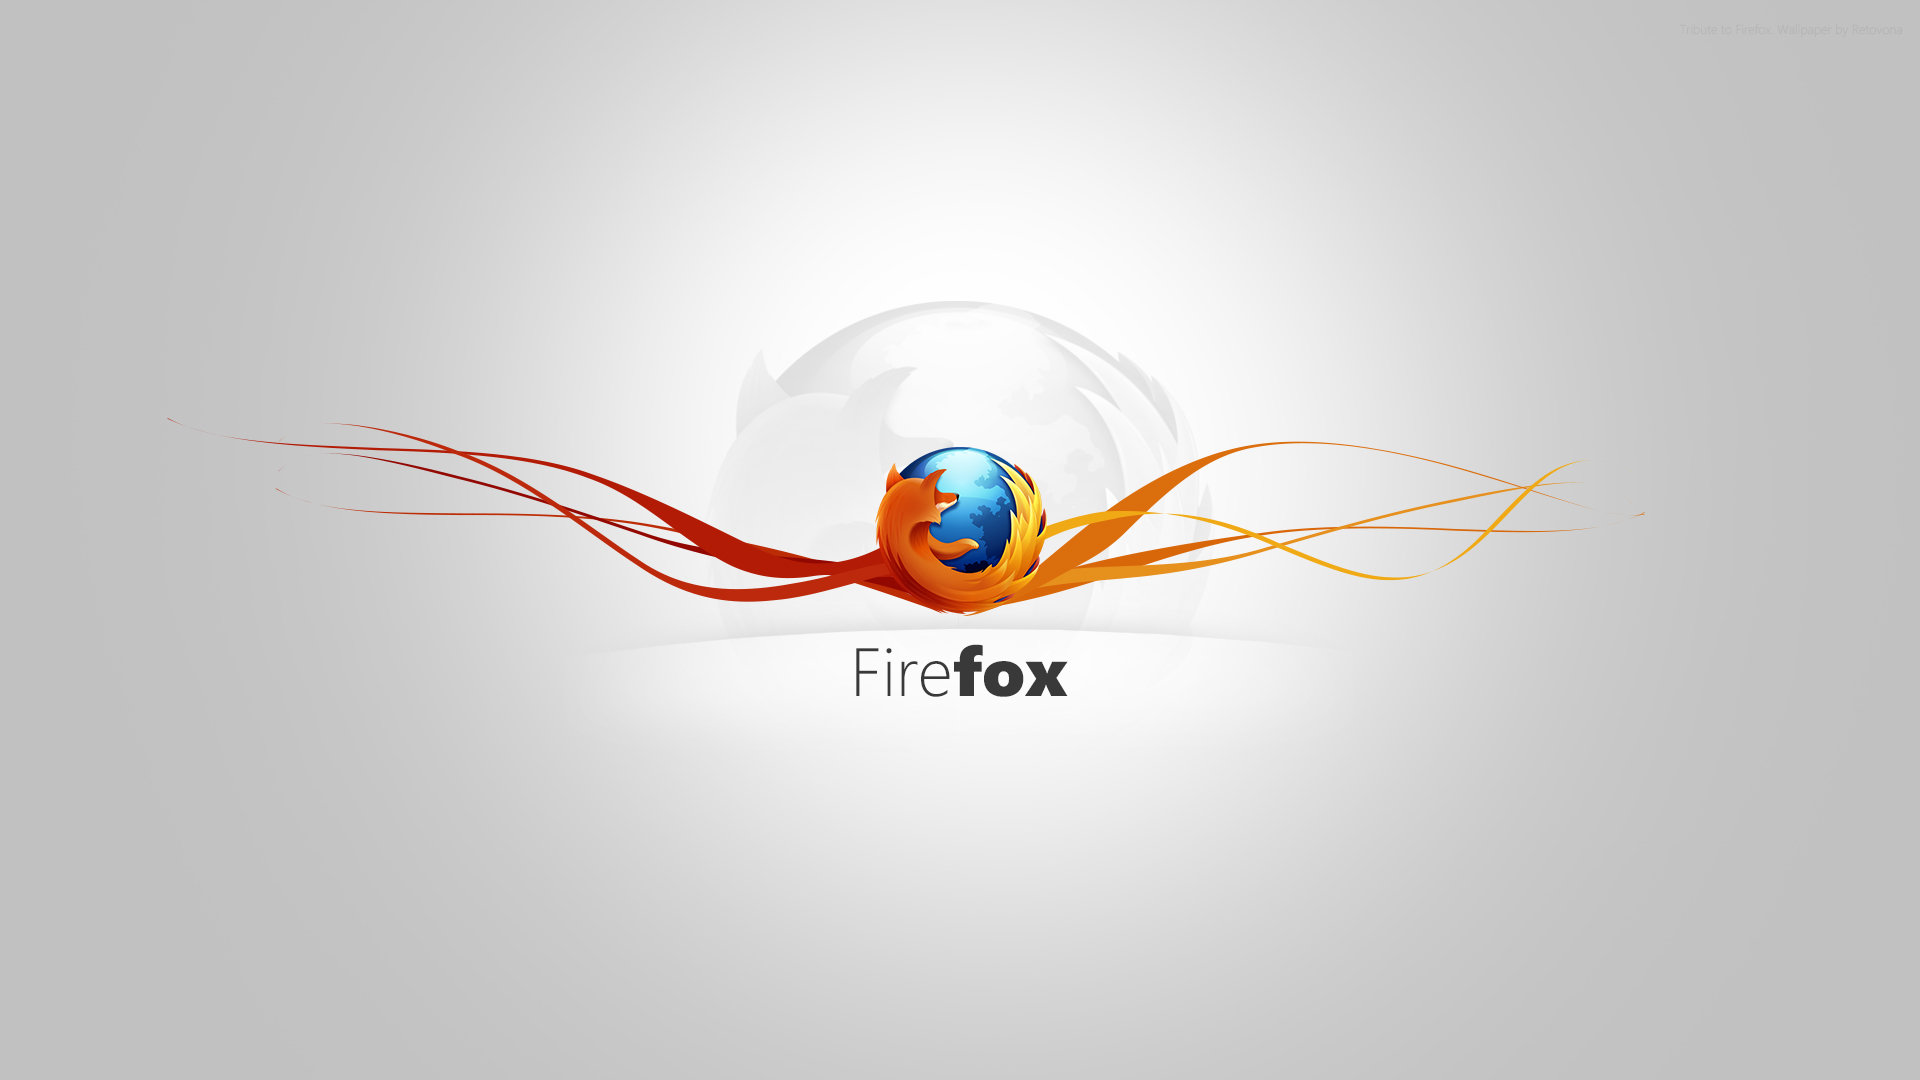 High resolution Firefox full hd 1920x1080 background ID:498775 for desktop